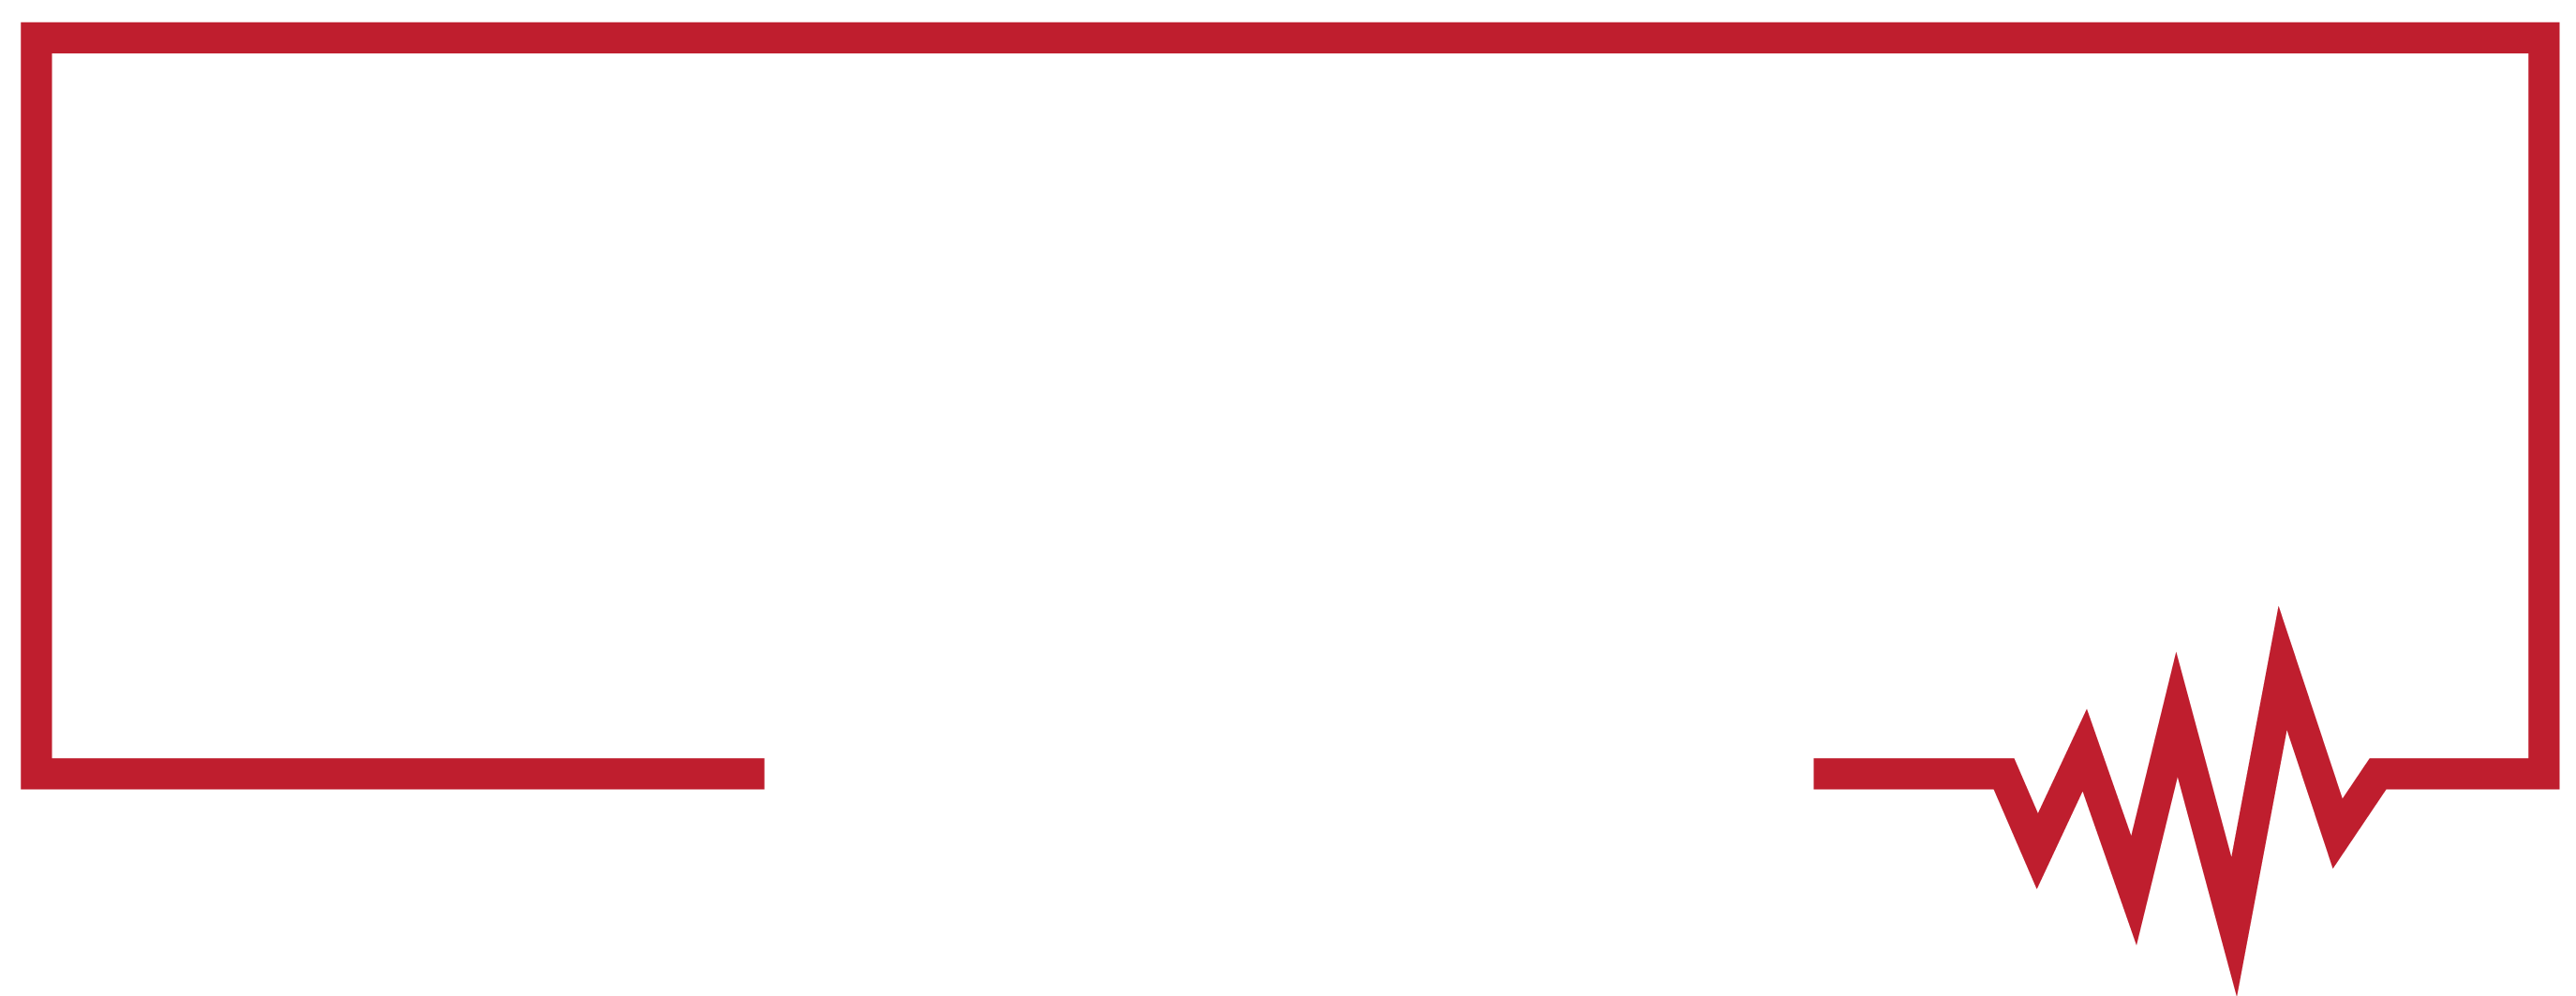 J.R. Jones Audio